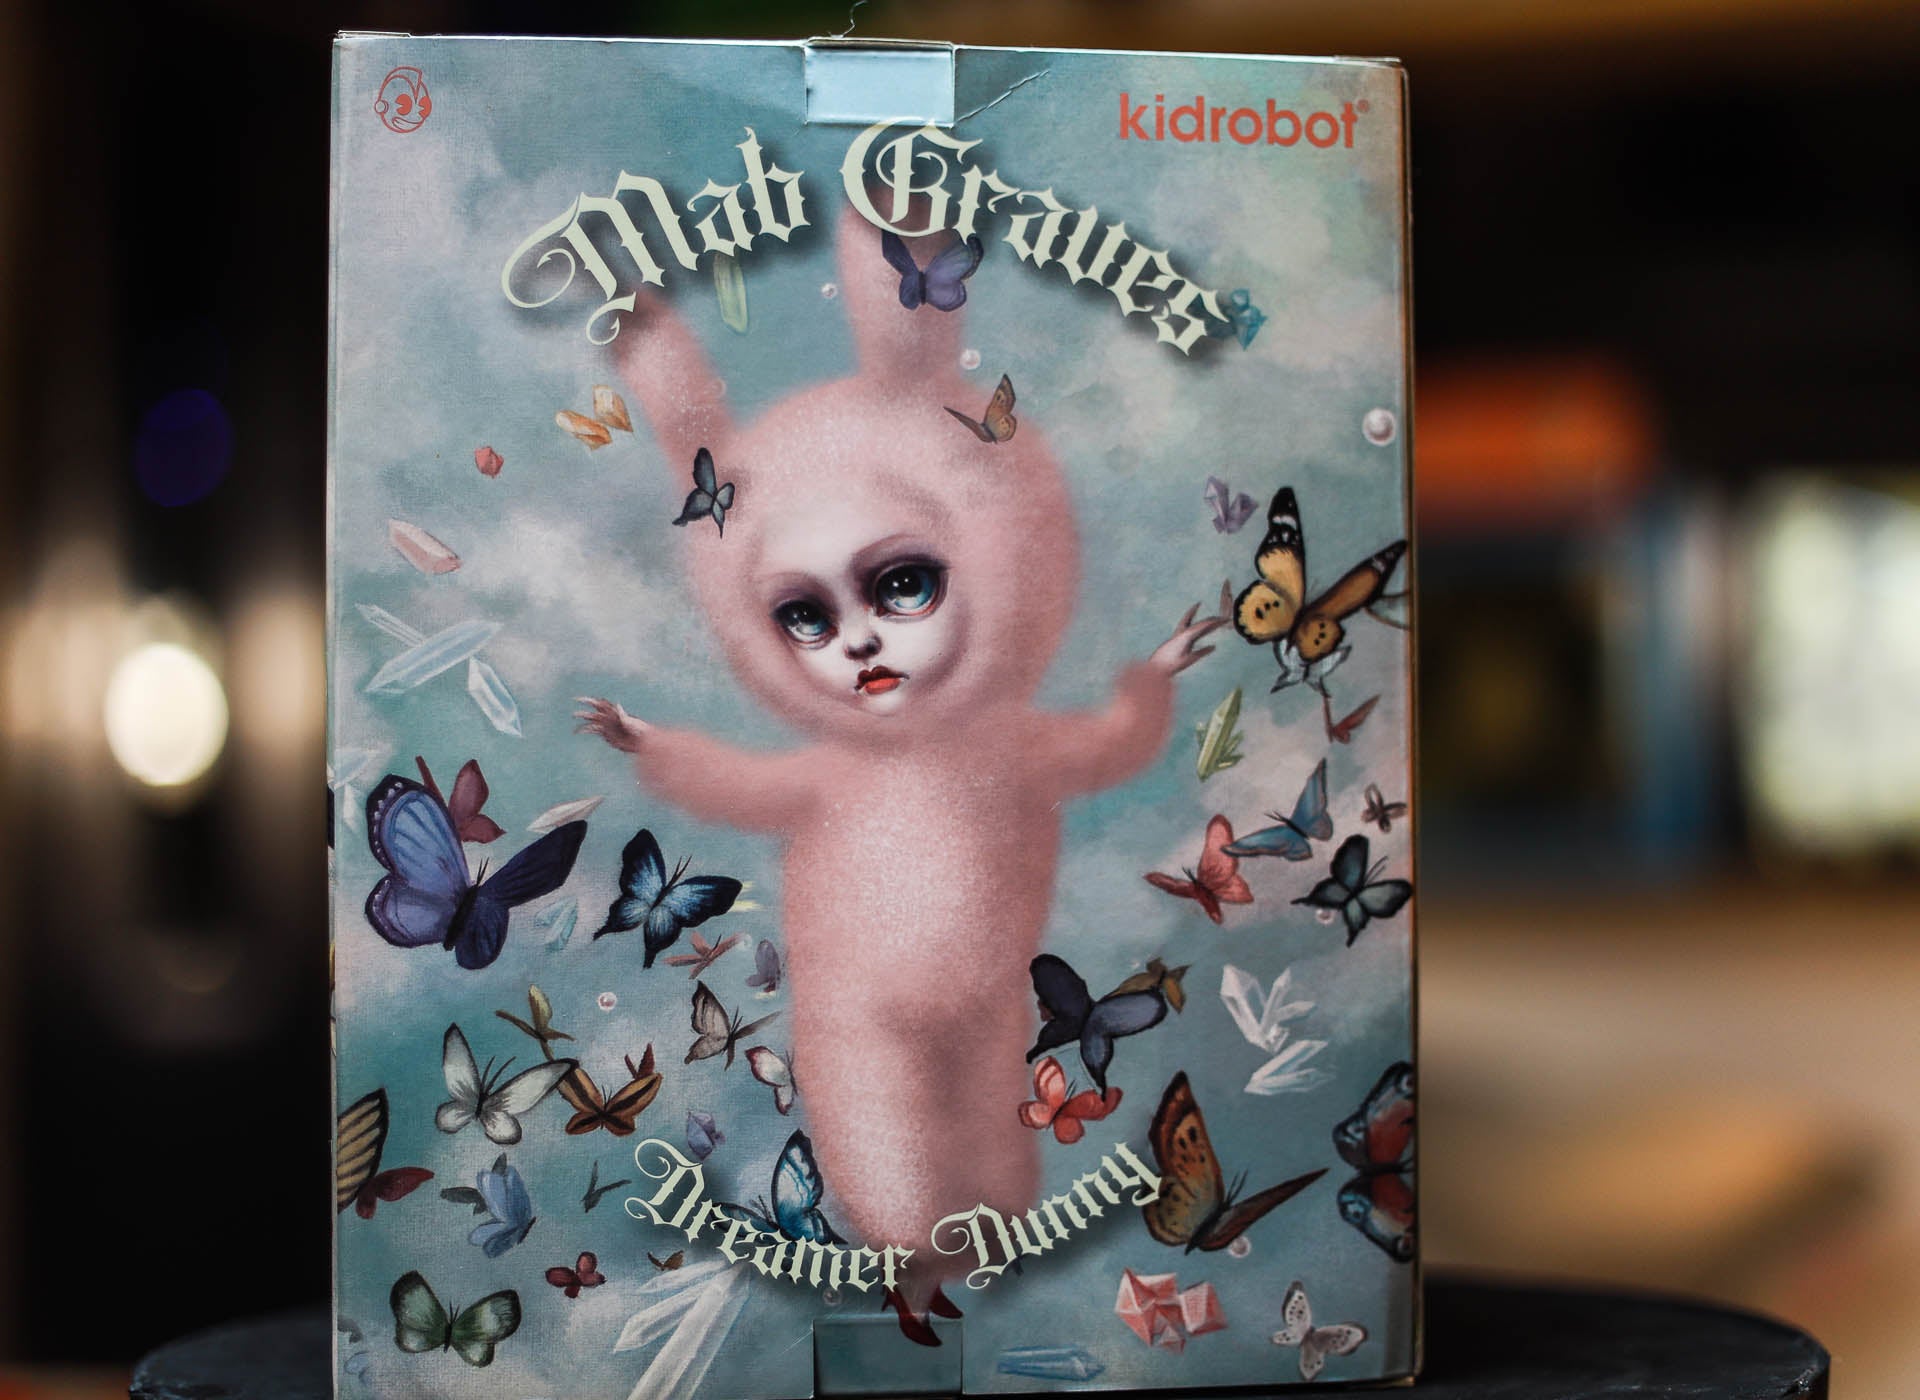 Mab Graves x Kidrobot - Dunny pop surrealista